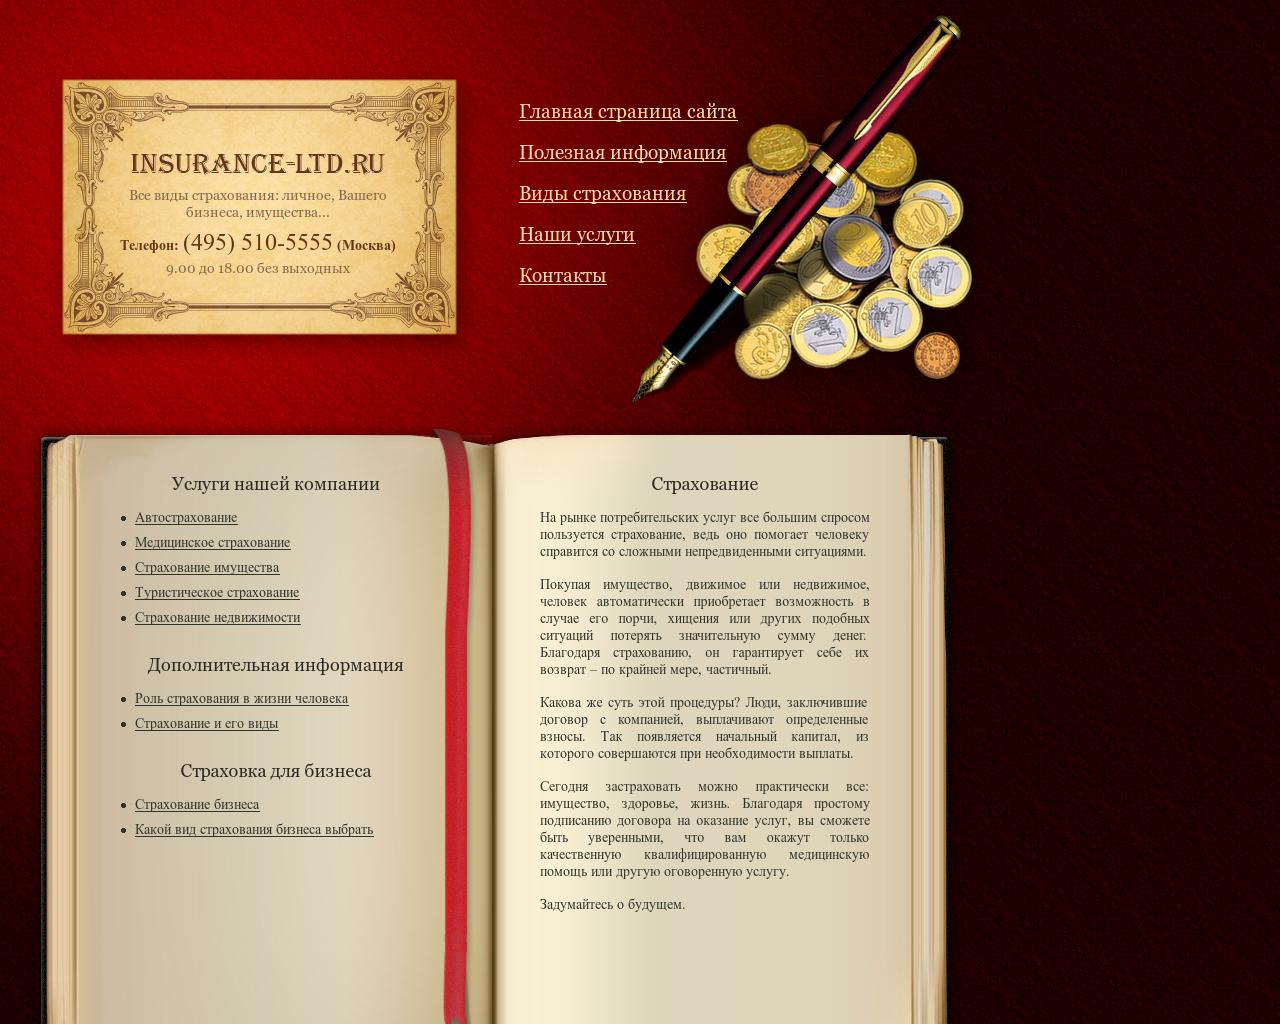 Изображение сайта insurance-ltd.ru в разрешении 1280x1024